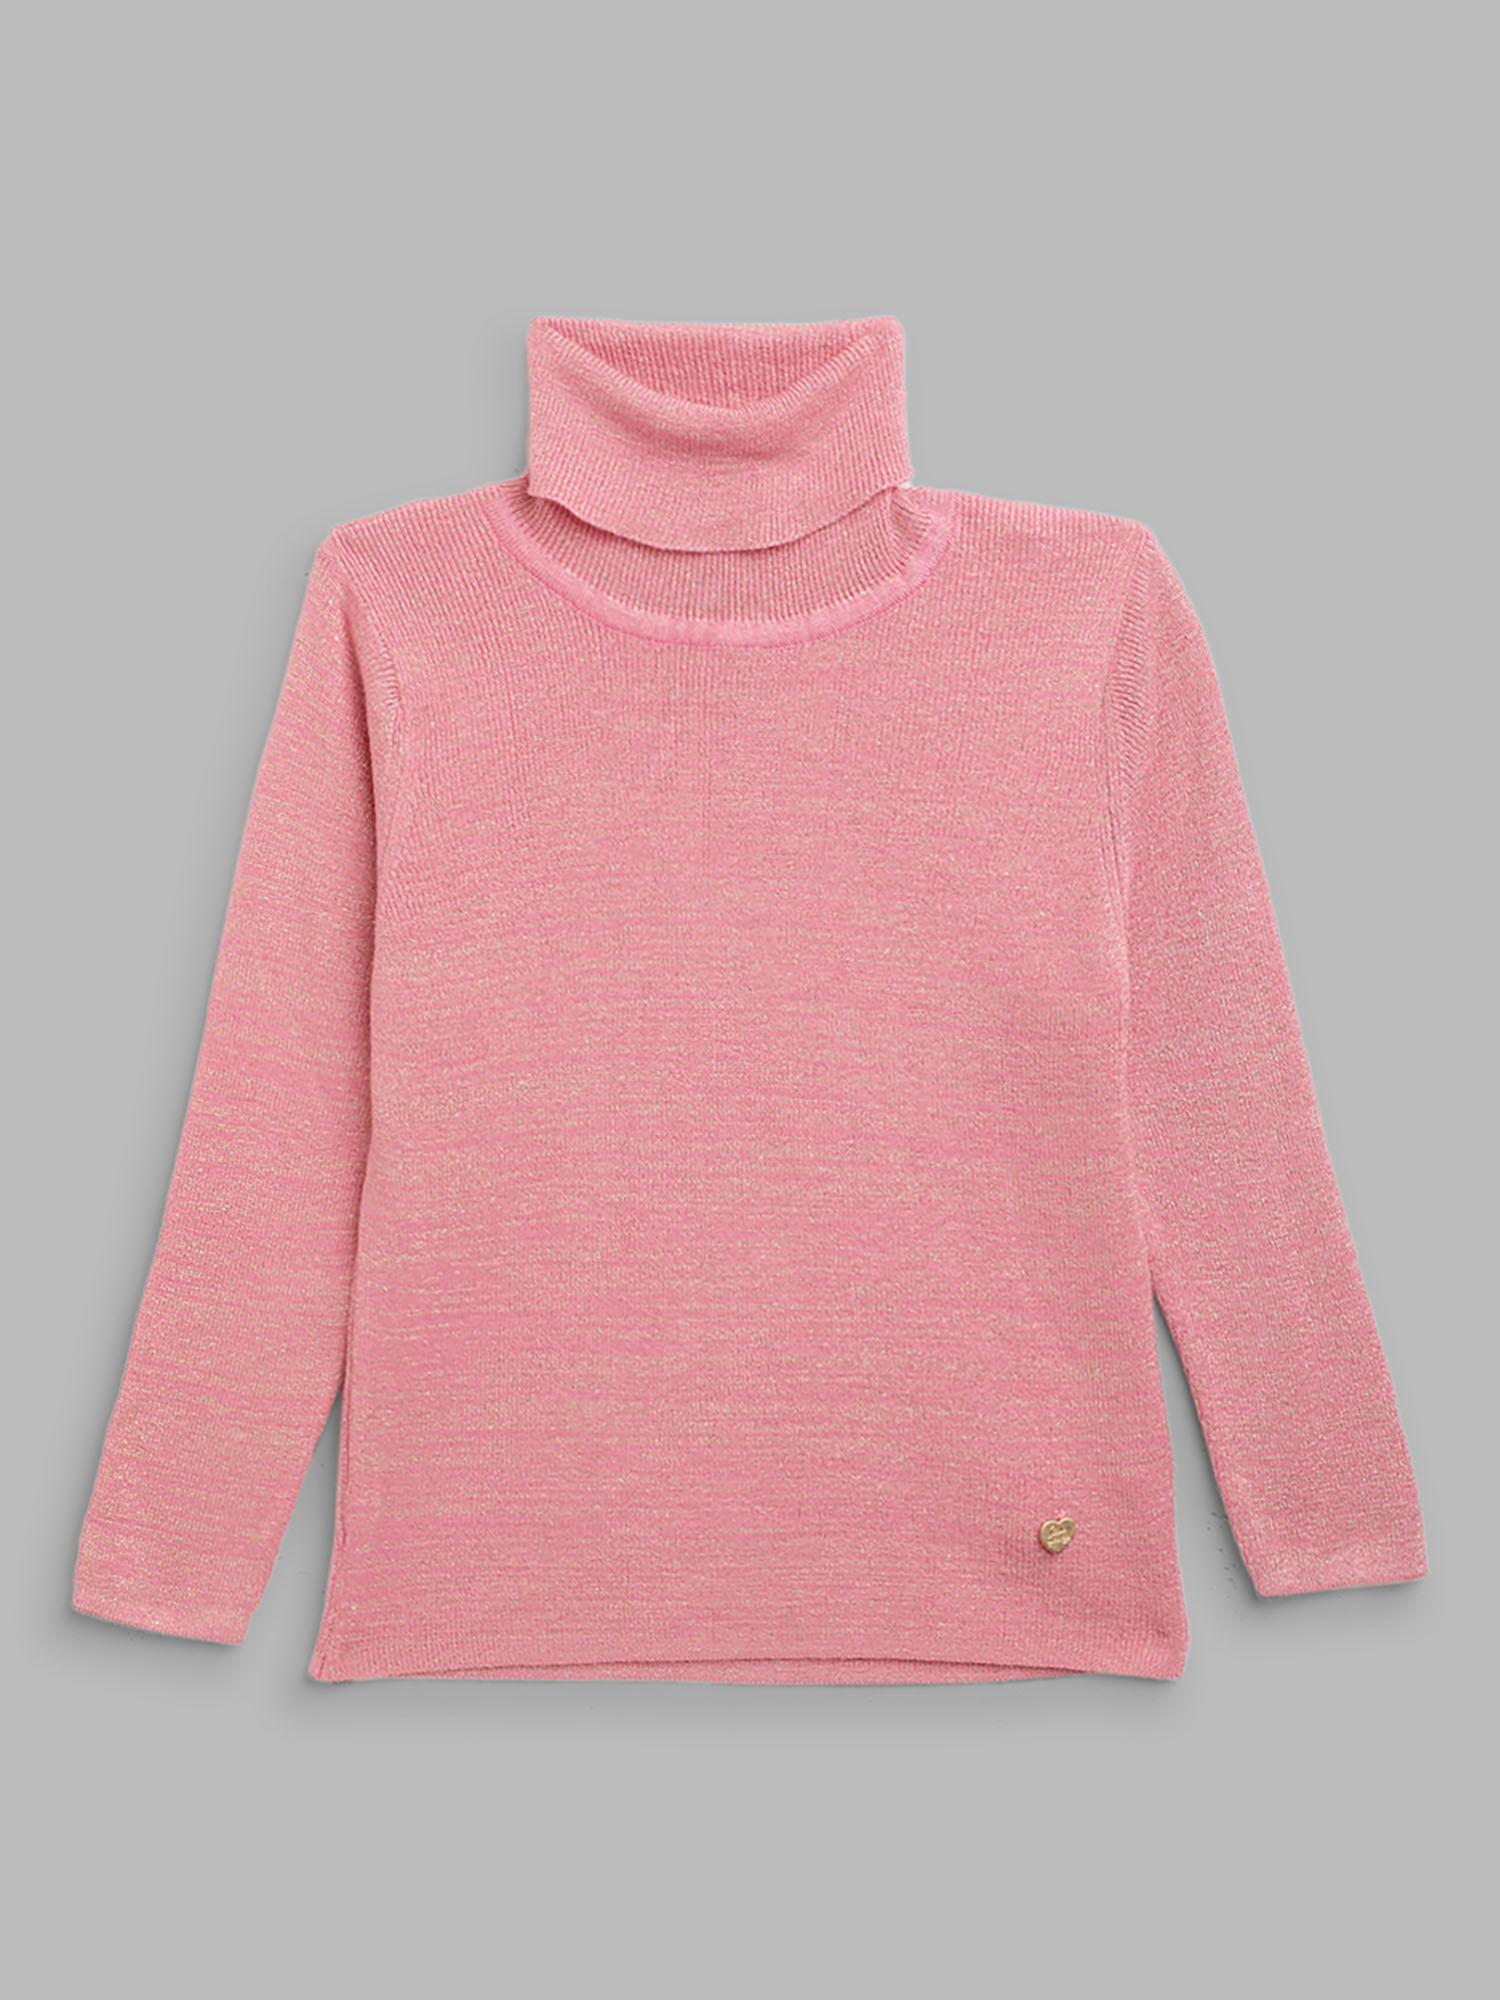 pink girls sweater